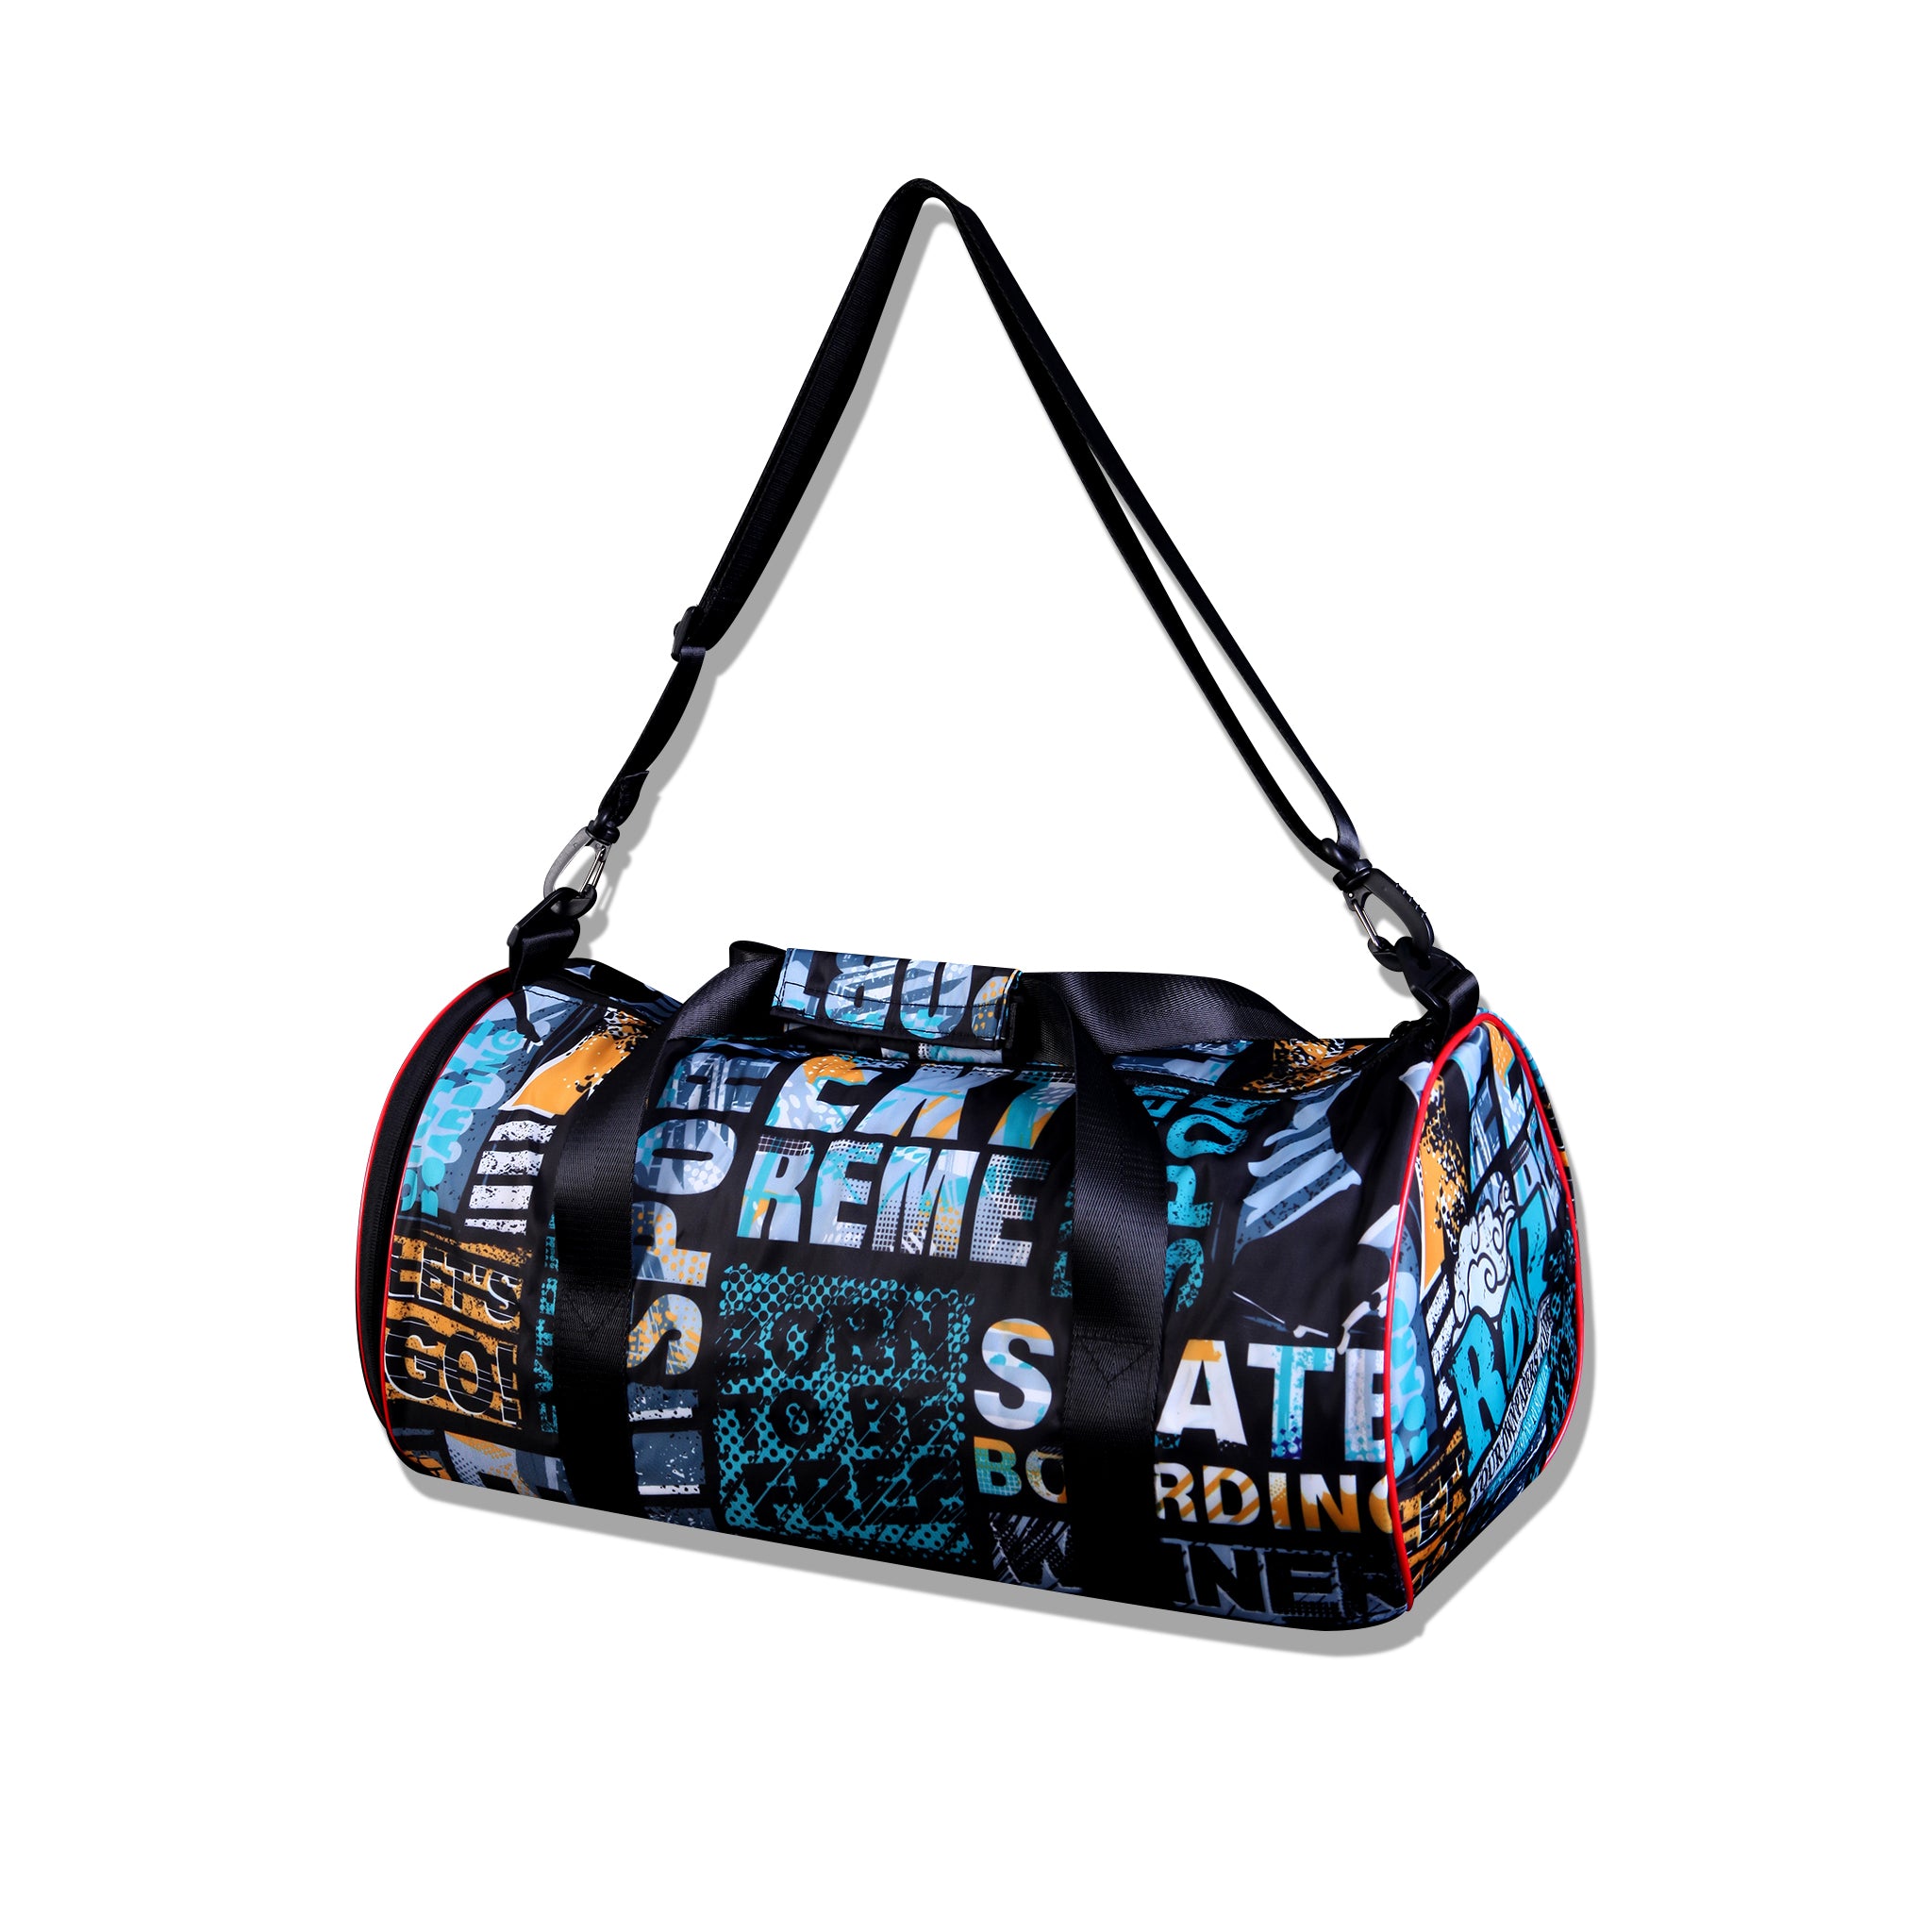 Custom Duffel Bowling Bag